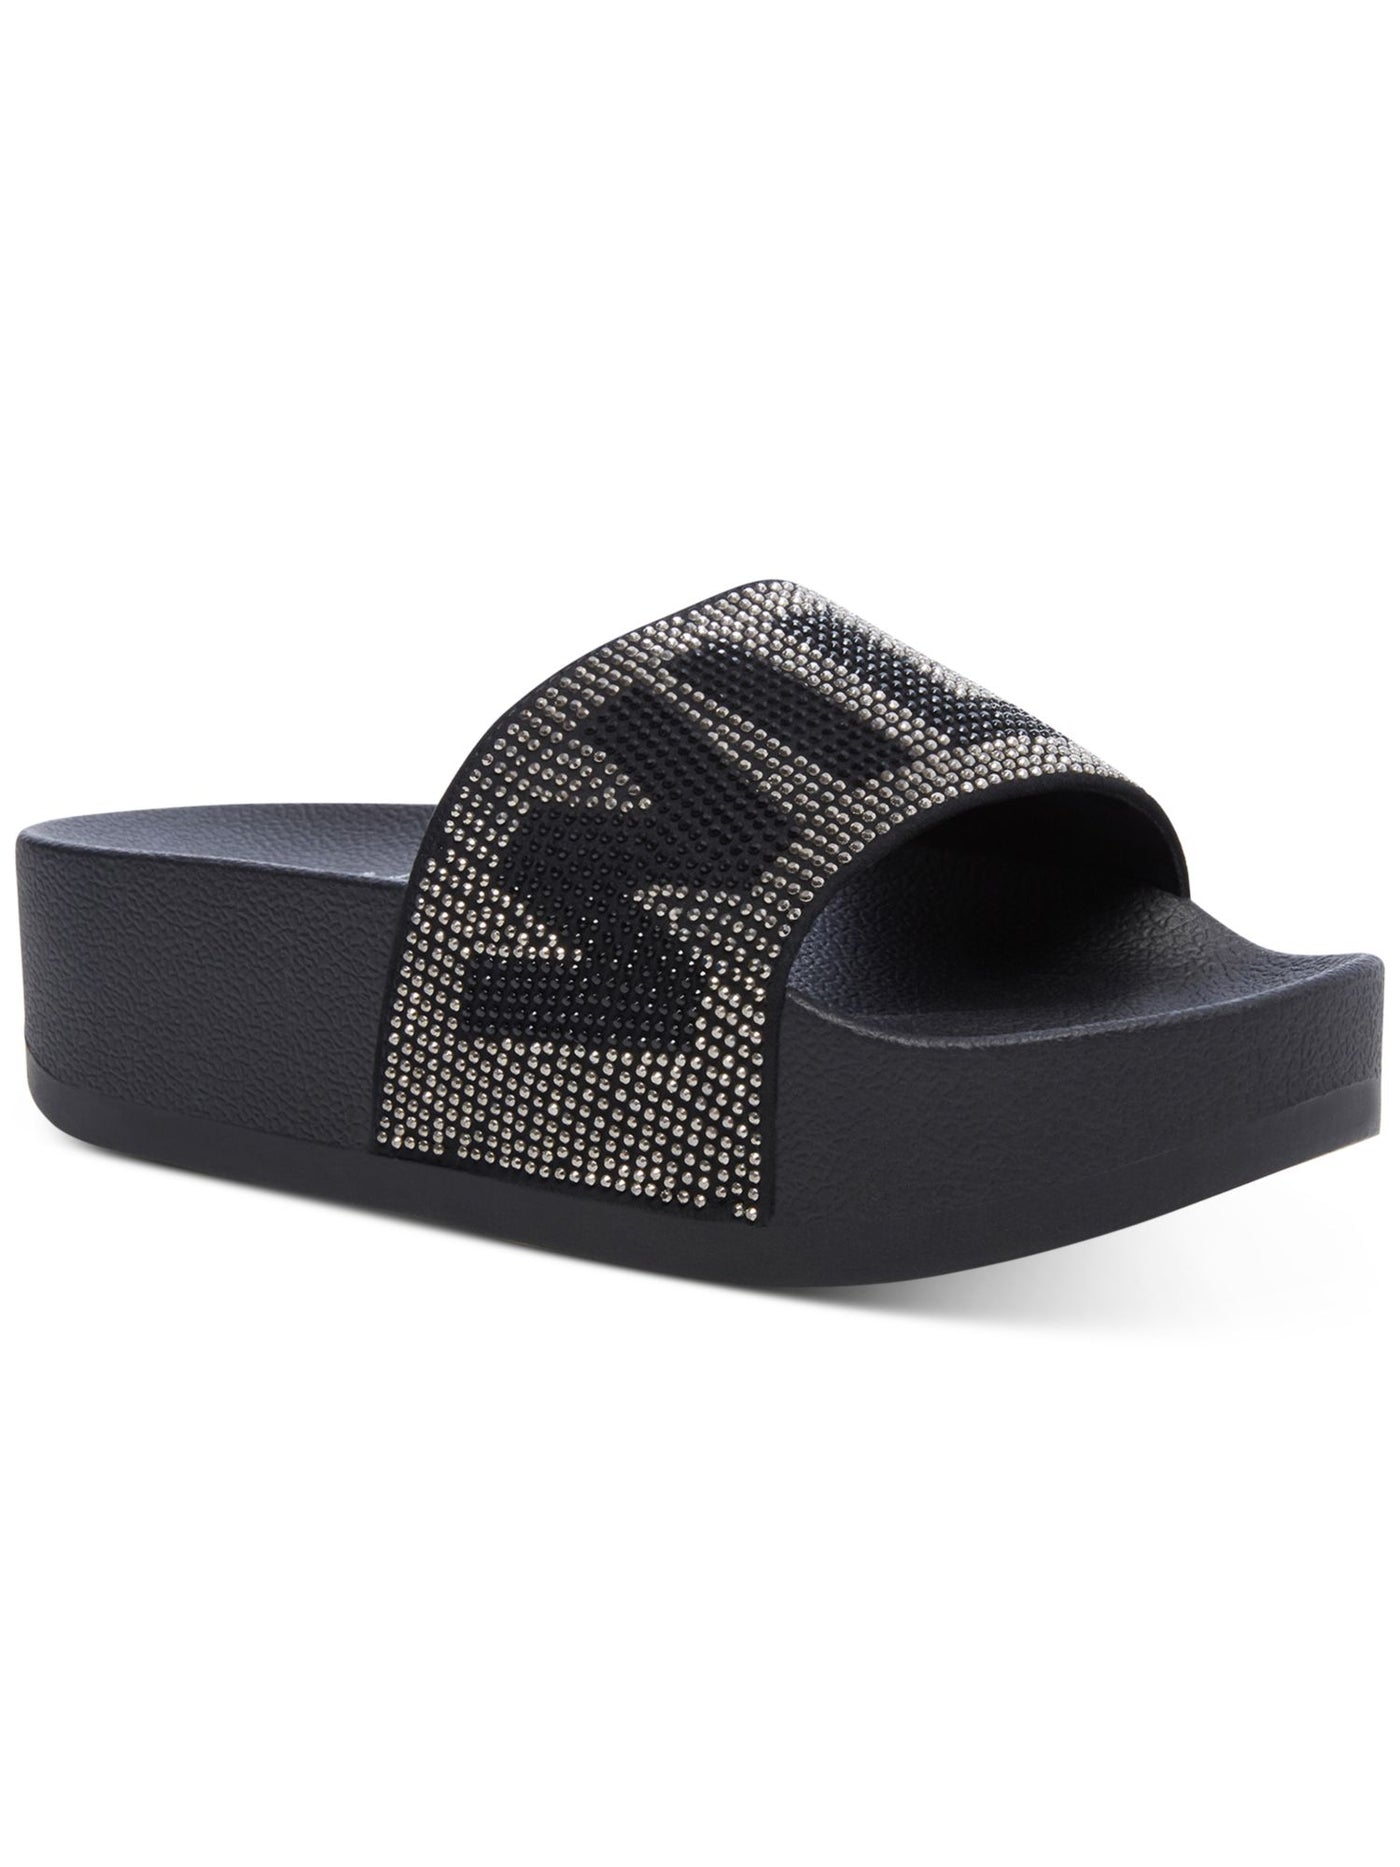 WILD PAIR Womens Black Logo Cushioned Rhinestone Caroletta Round Toe Platform Slip On Slide Sandals Shoes 7.5